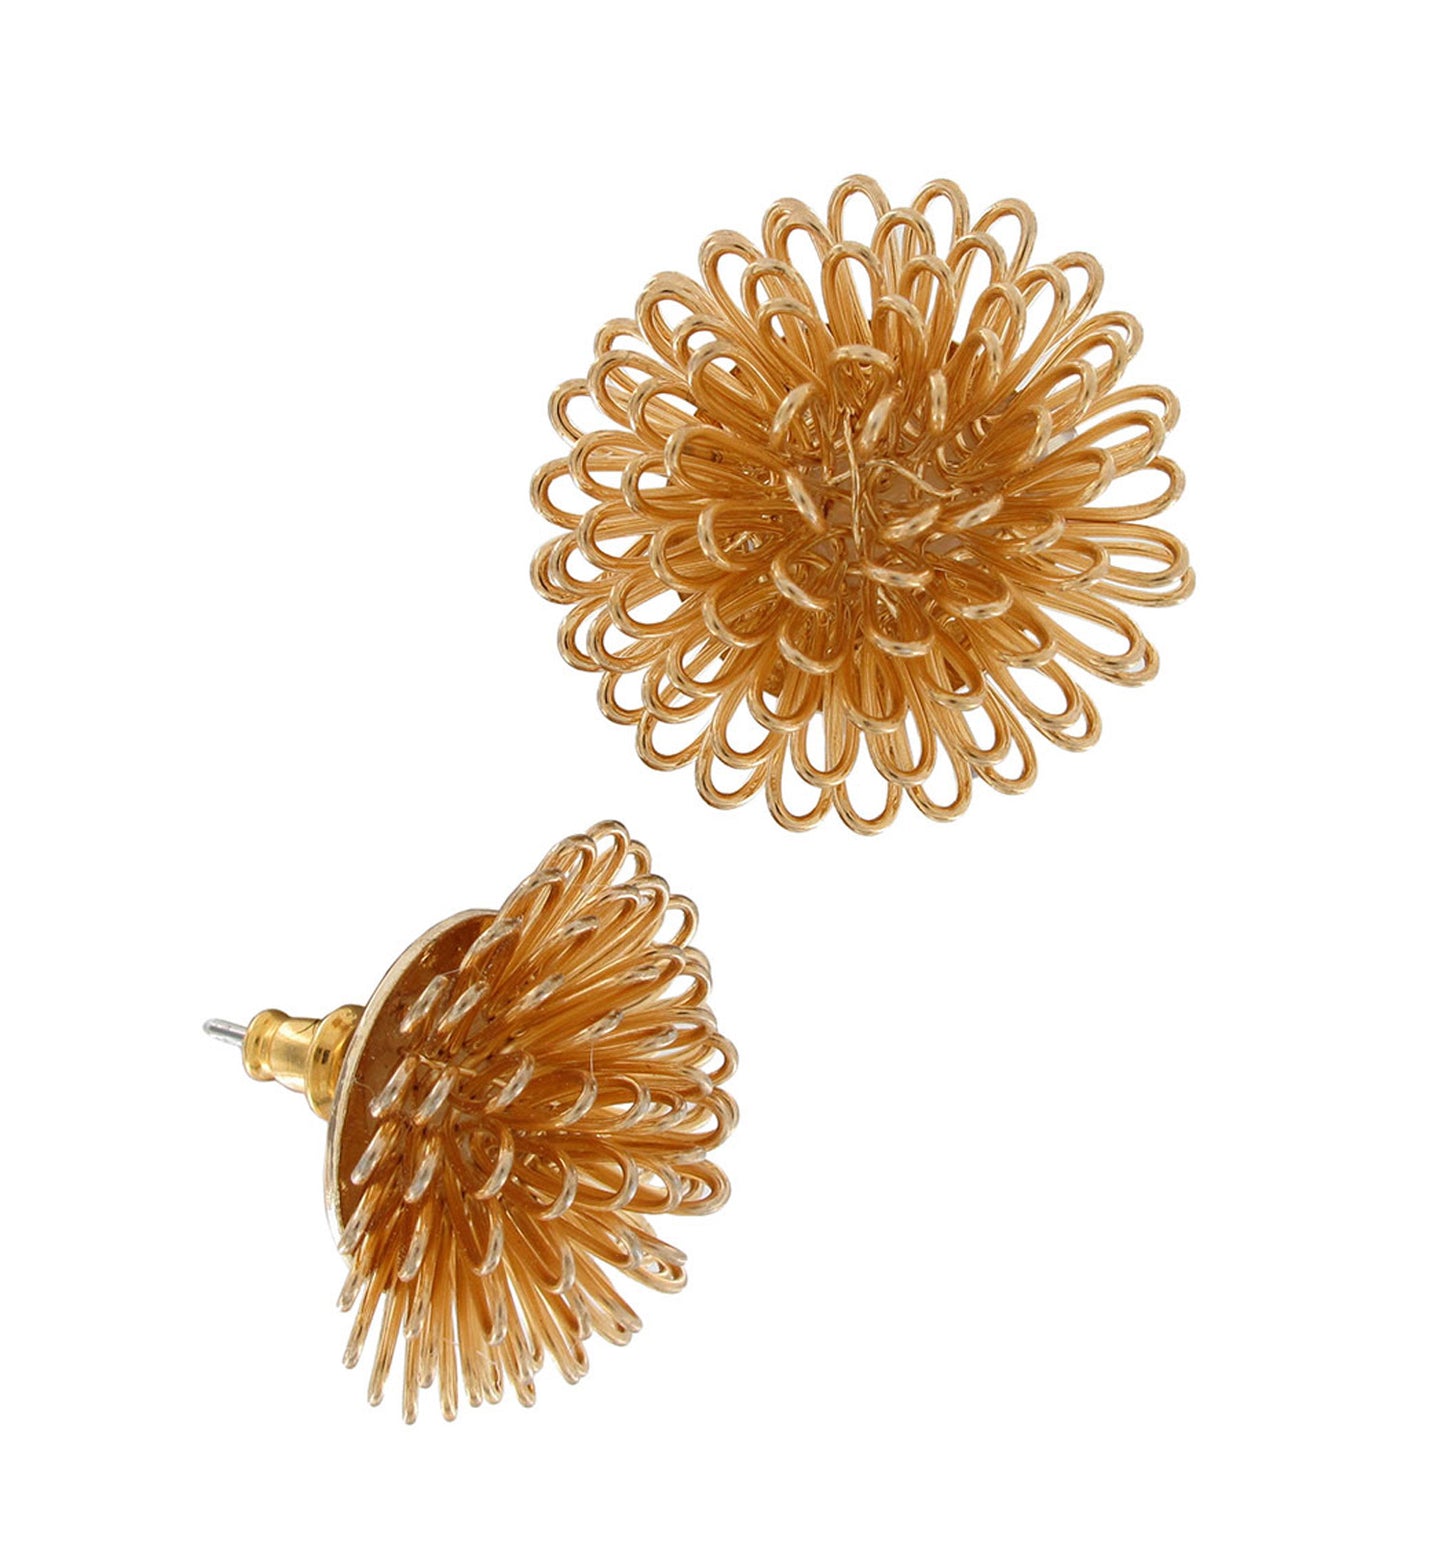 Pierced Earrings Bristle Ball Button Flower Gold Tone 7/8"